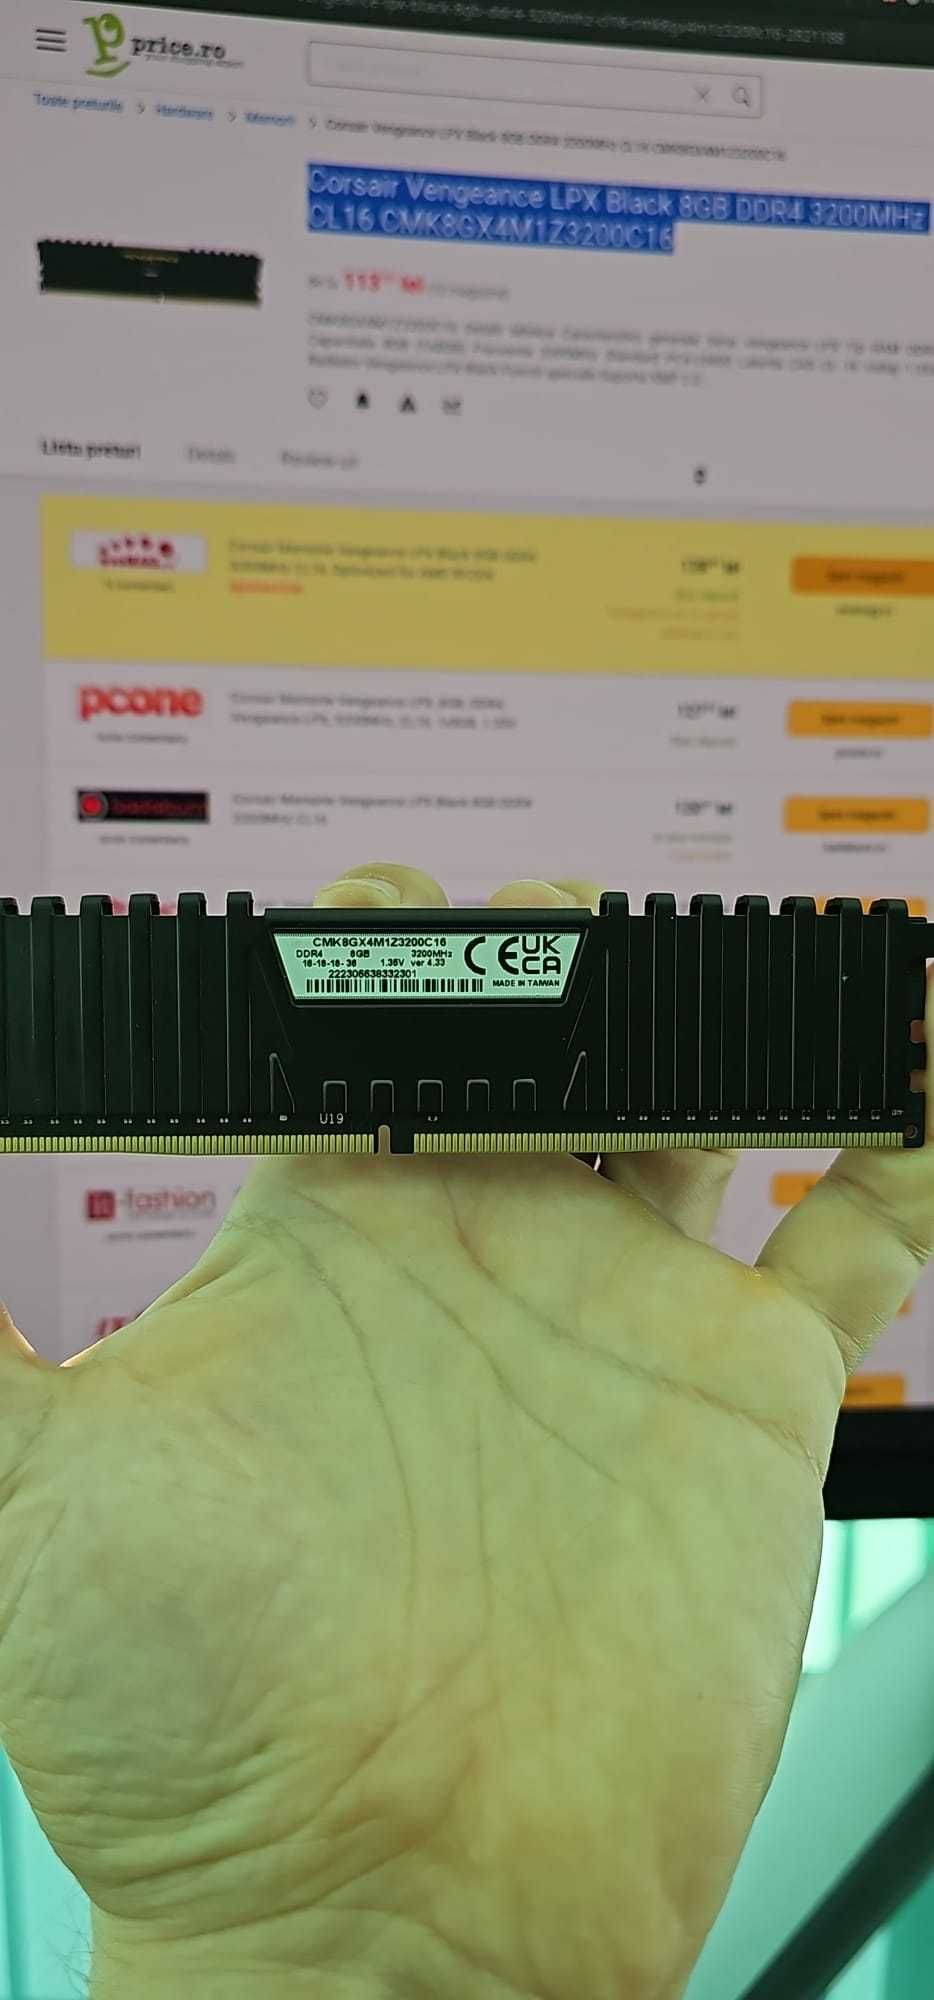 64GB(8x8) Corsair Vengeance LPX Black 8GB DDR4 3200MHz CL16